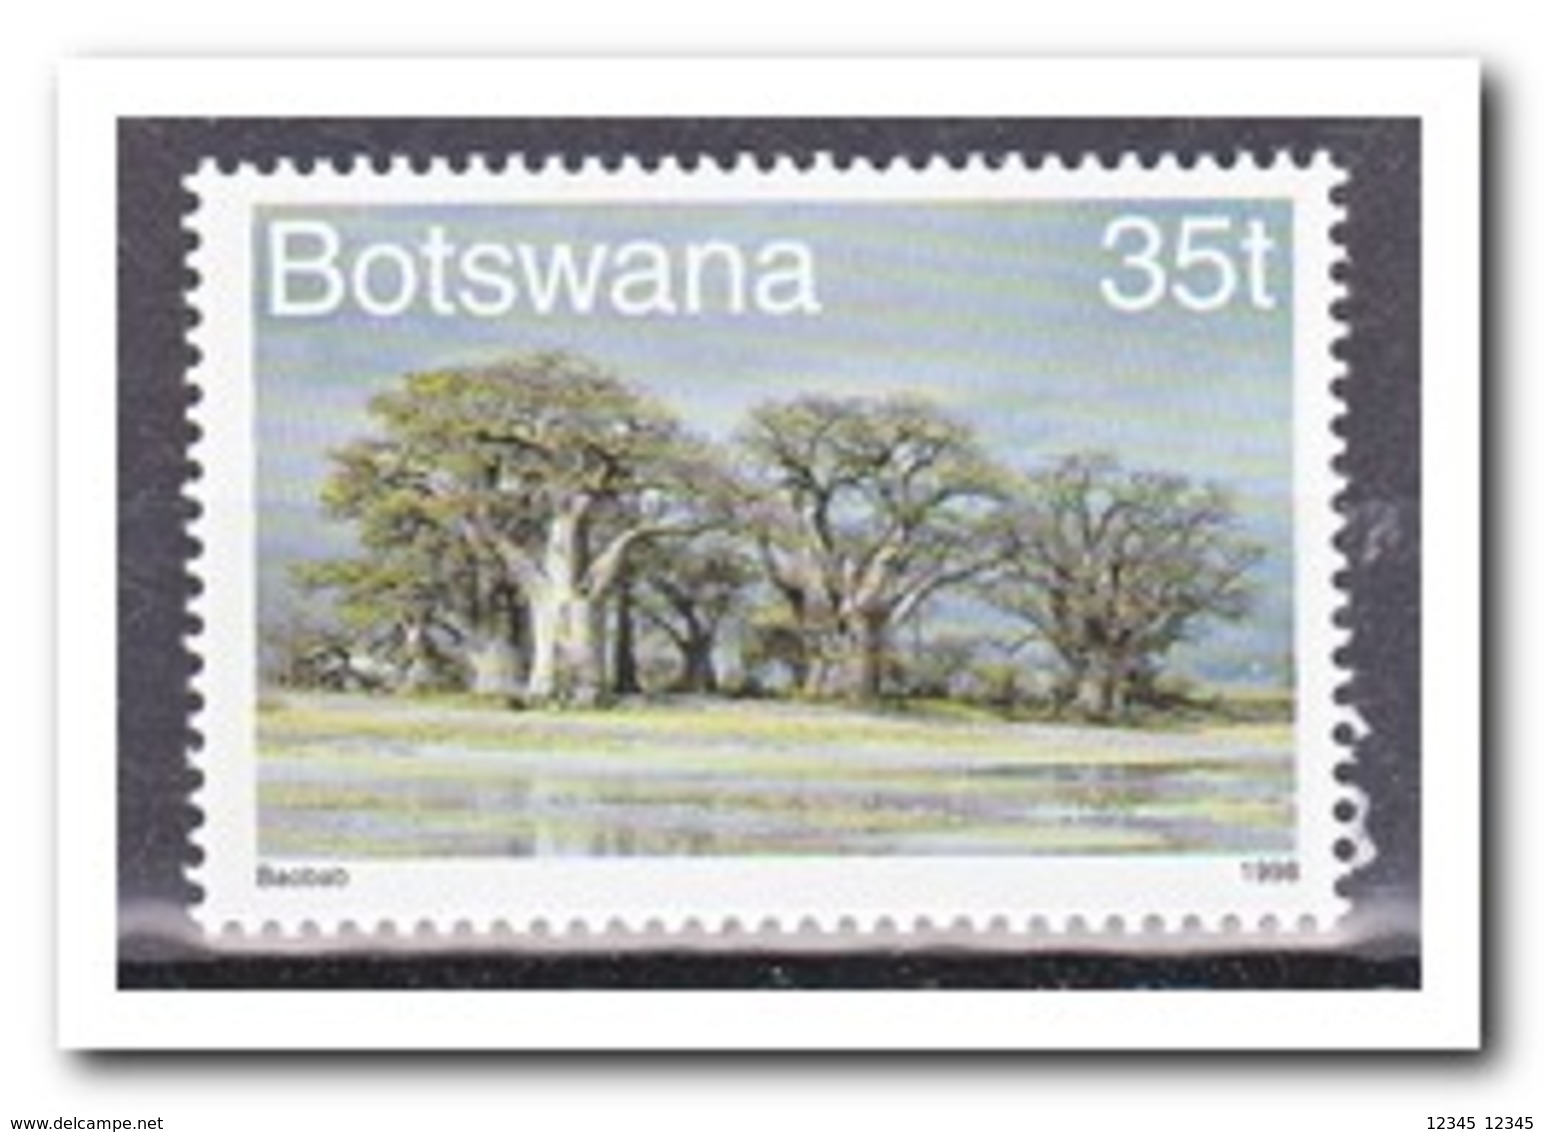 Botswana 1998, Postfris MNH, Trees - Botswana (1966-...)